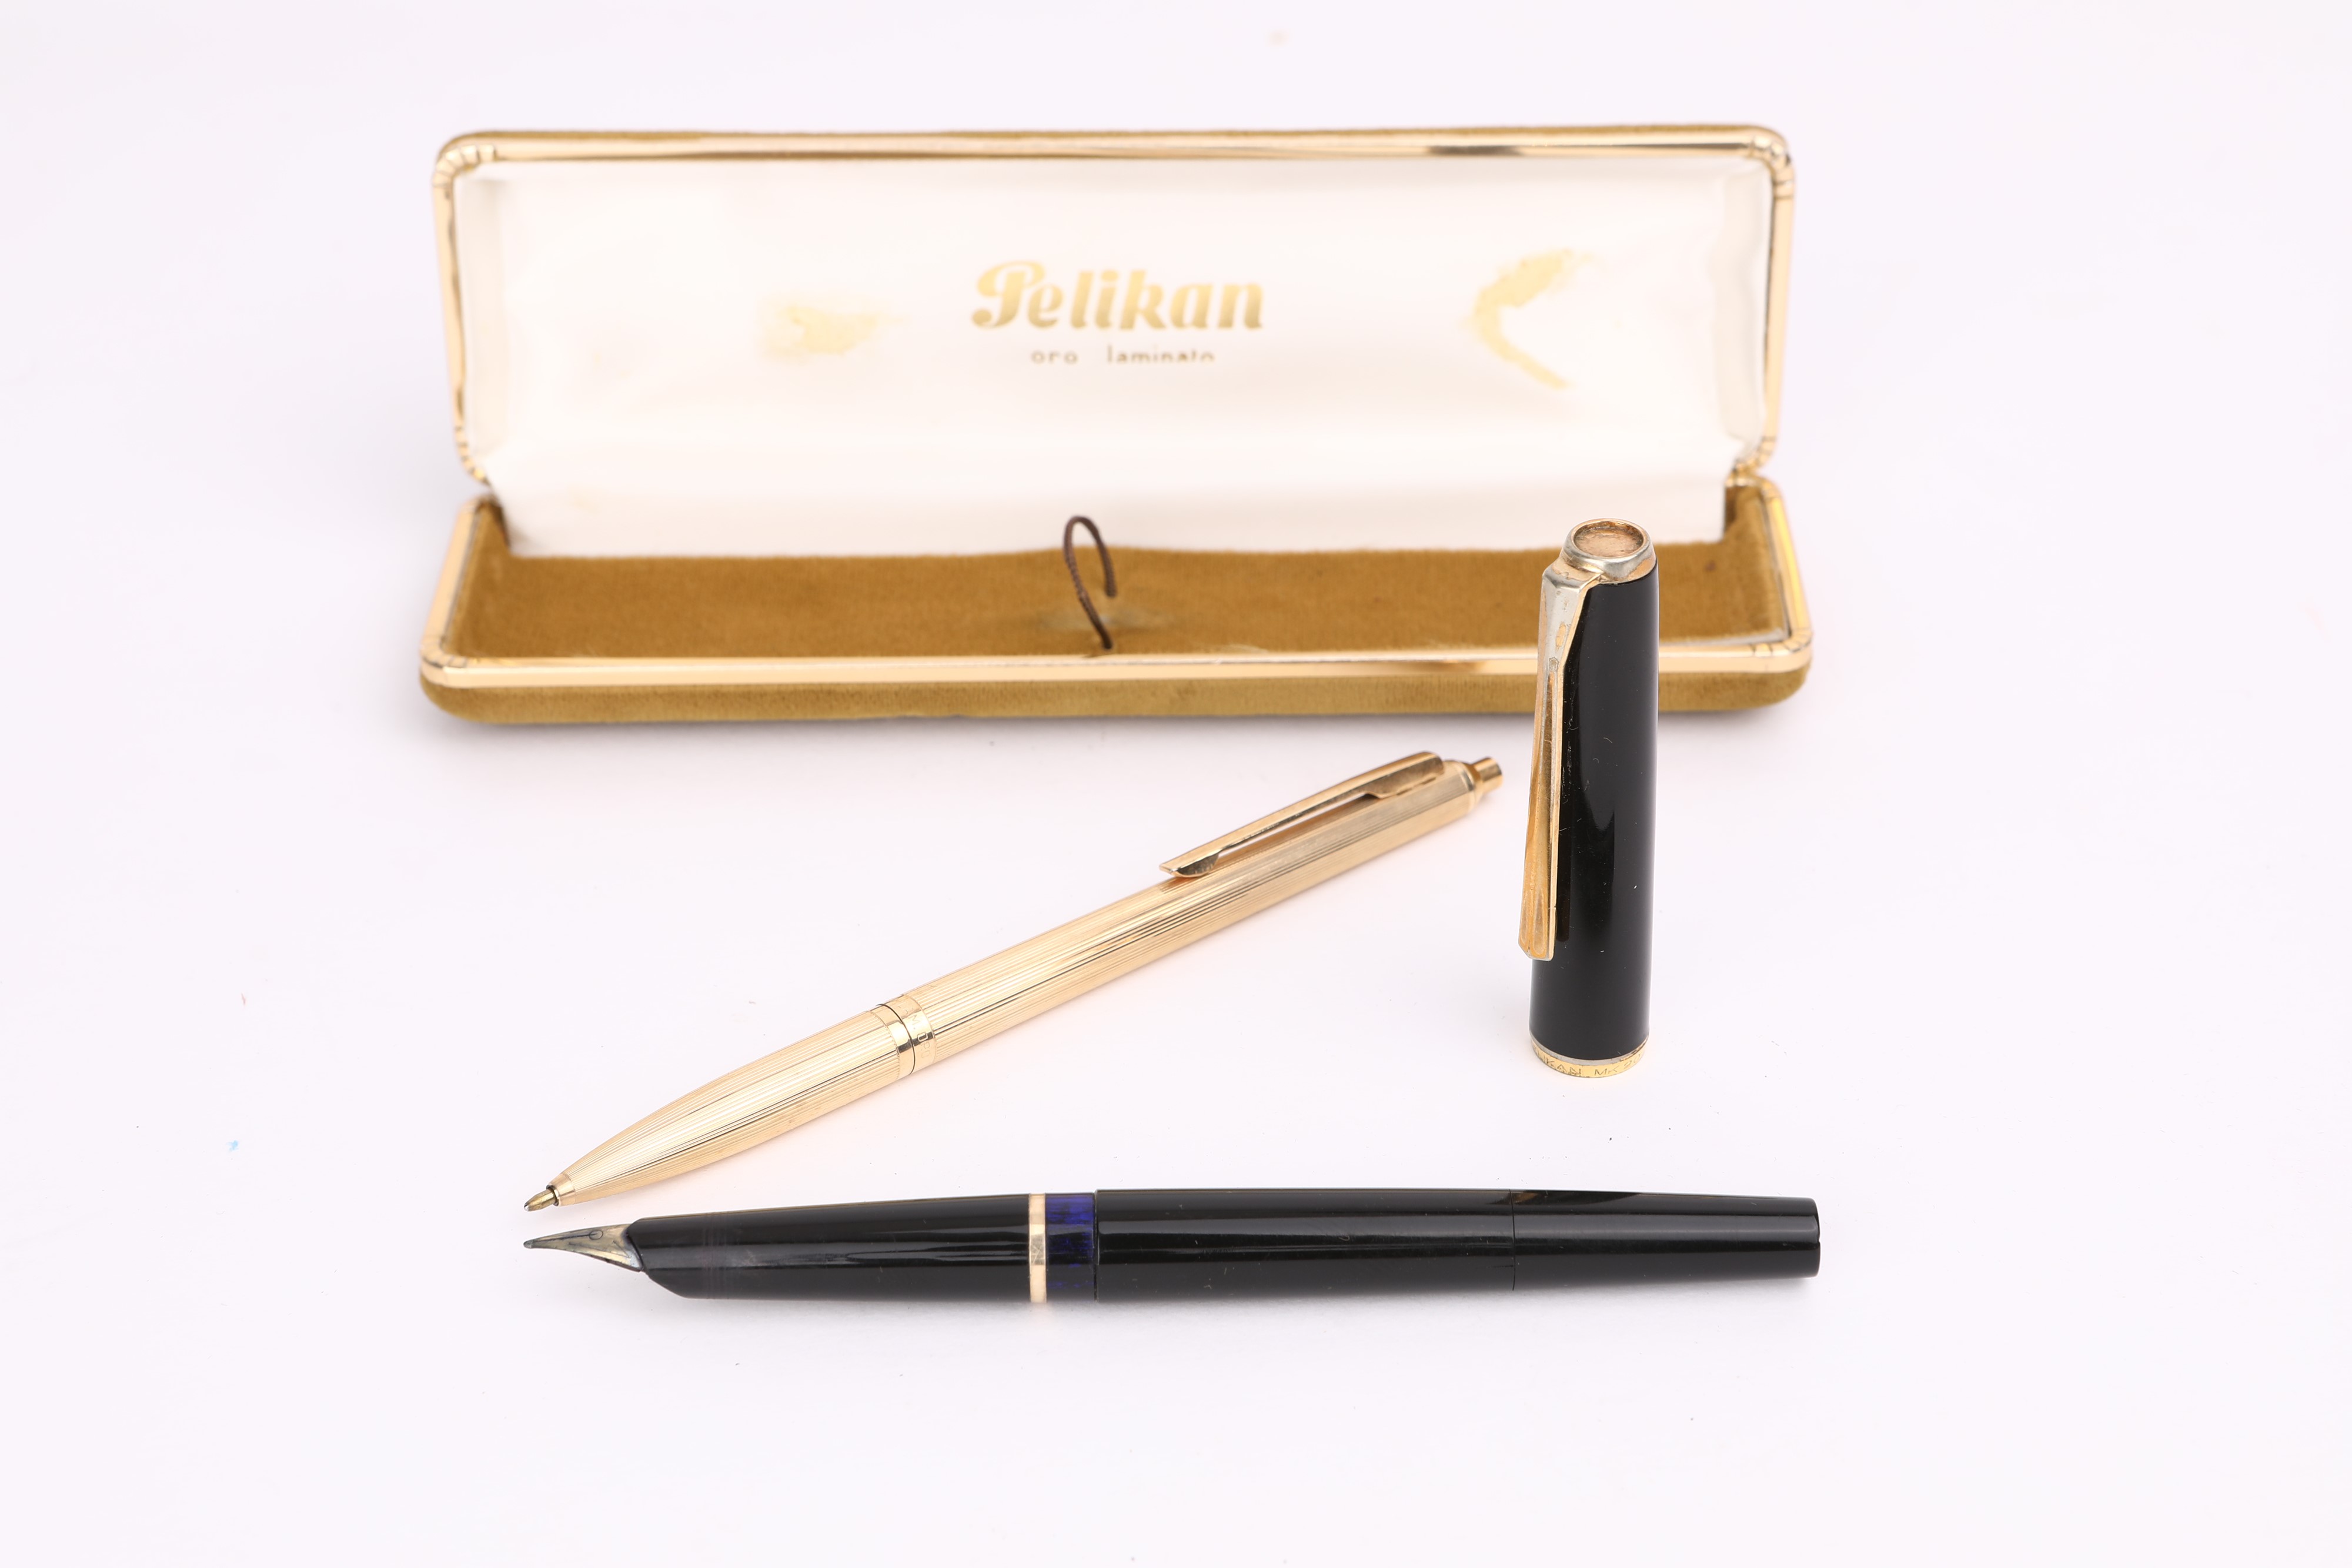 Pelikan - Penna a sfera vintage laminata in oro - Pelikan MK20